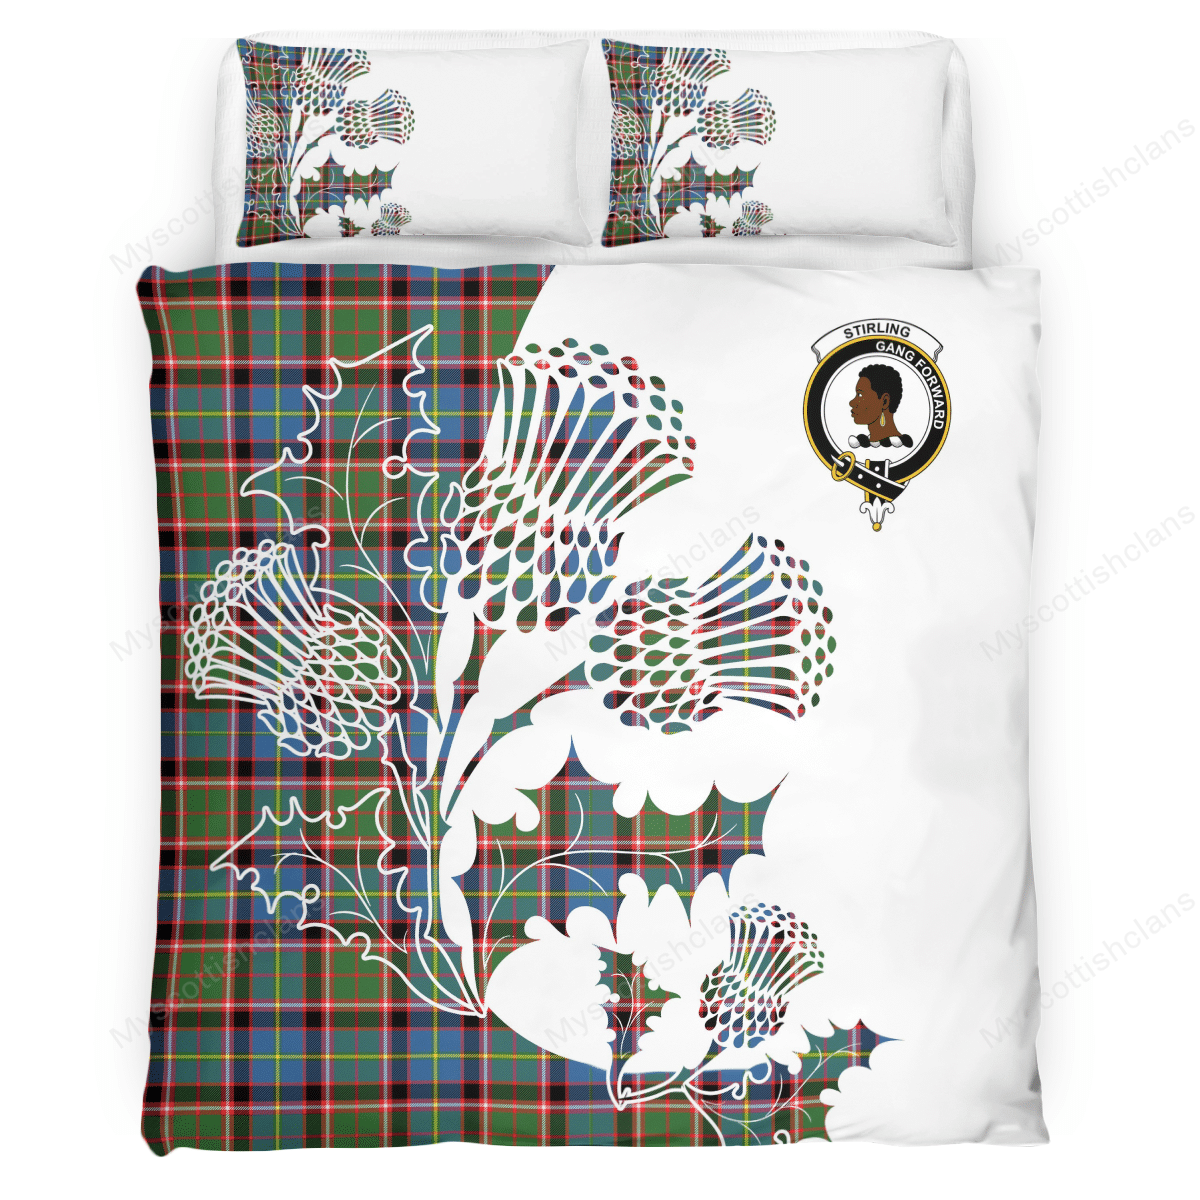 Stirling (of Keir) Tartan Crest Bedding Set - Thistle Style